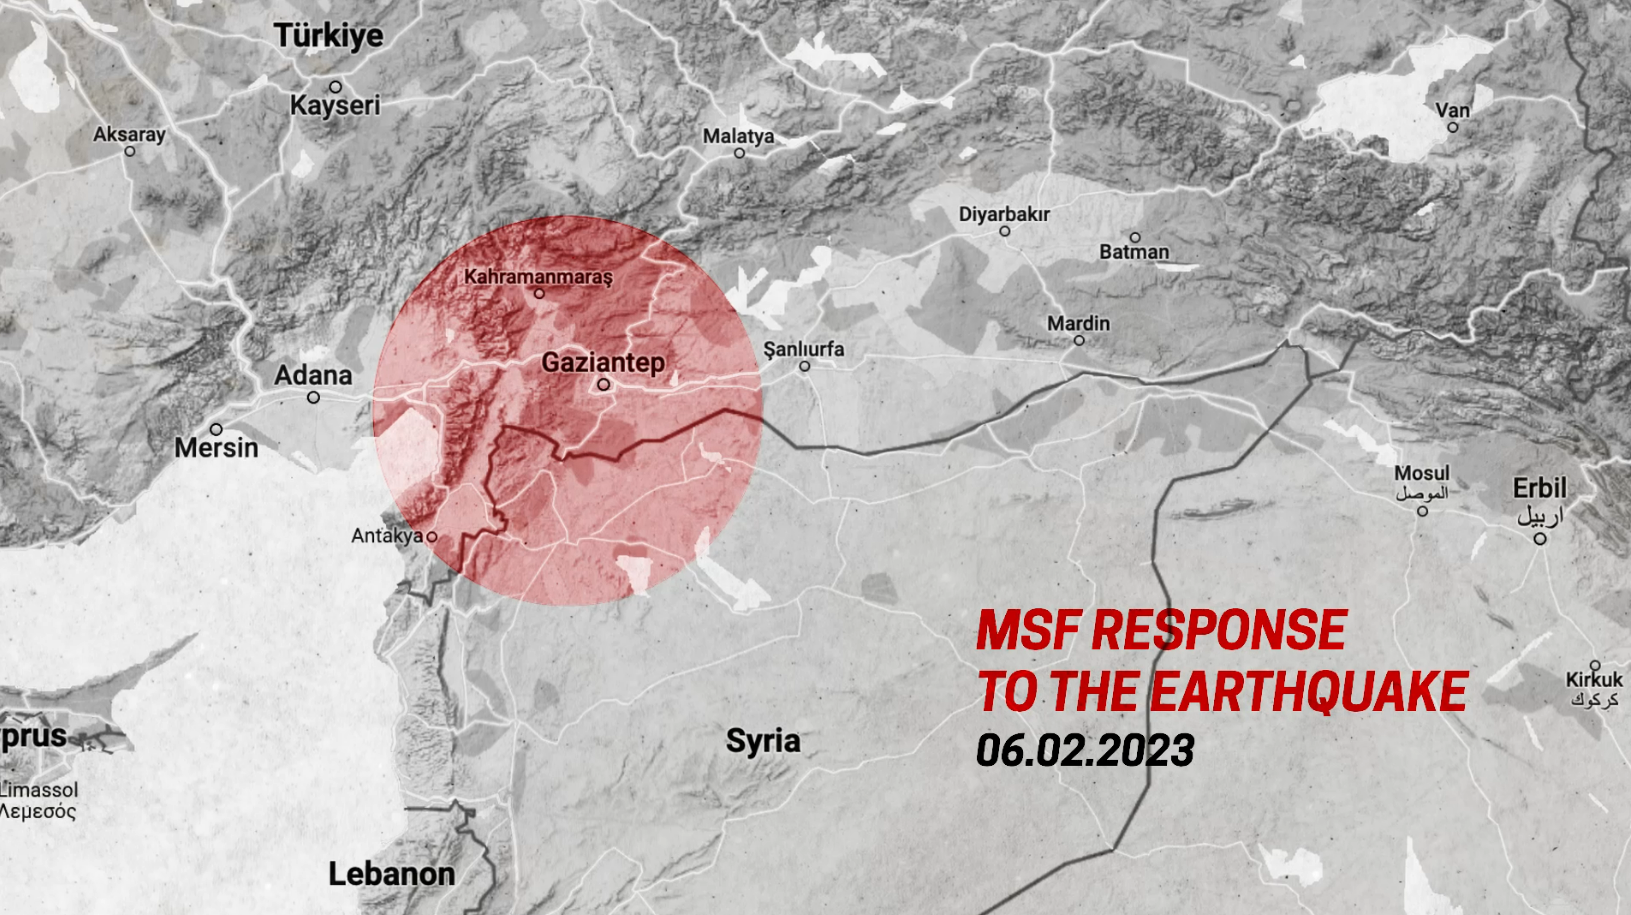 Map of Turkiye and Syria earthquake response